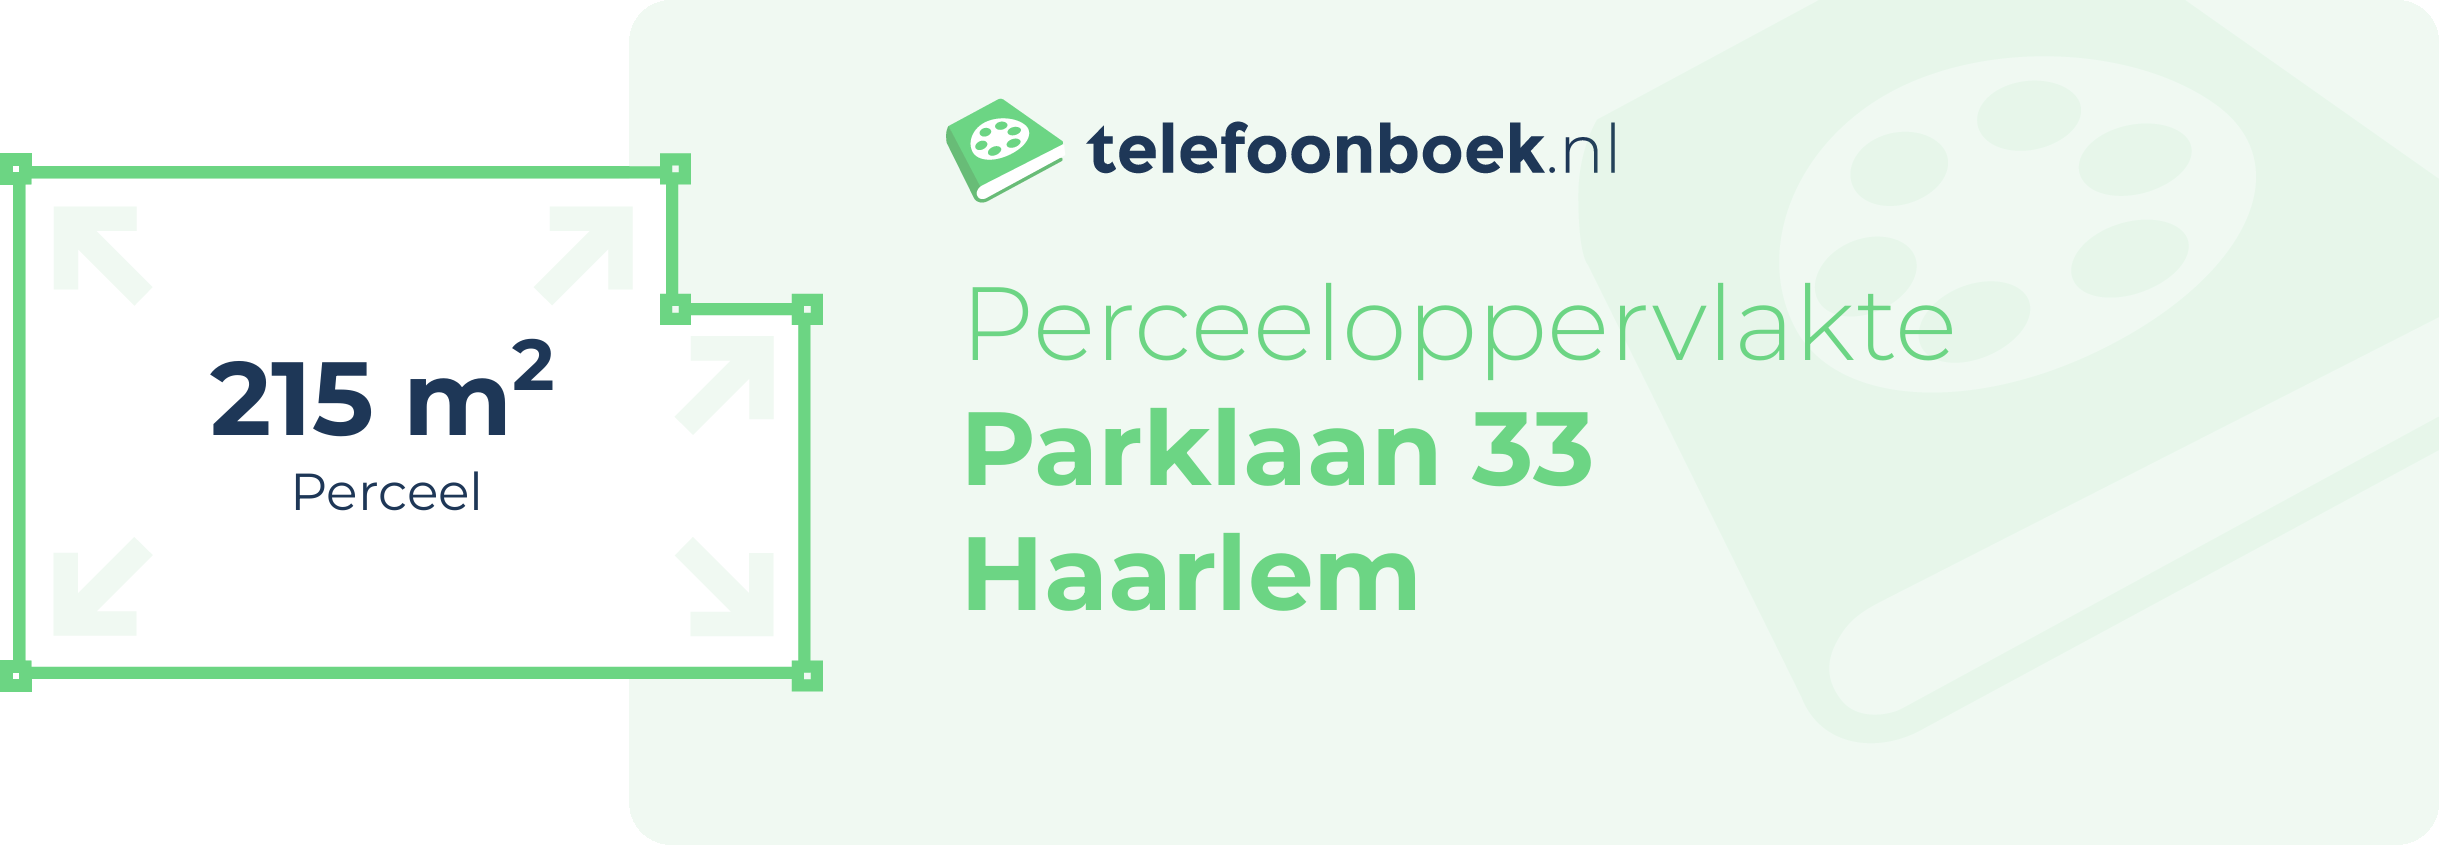 Perceeloppervlakte Parklaan 33 Haarlem